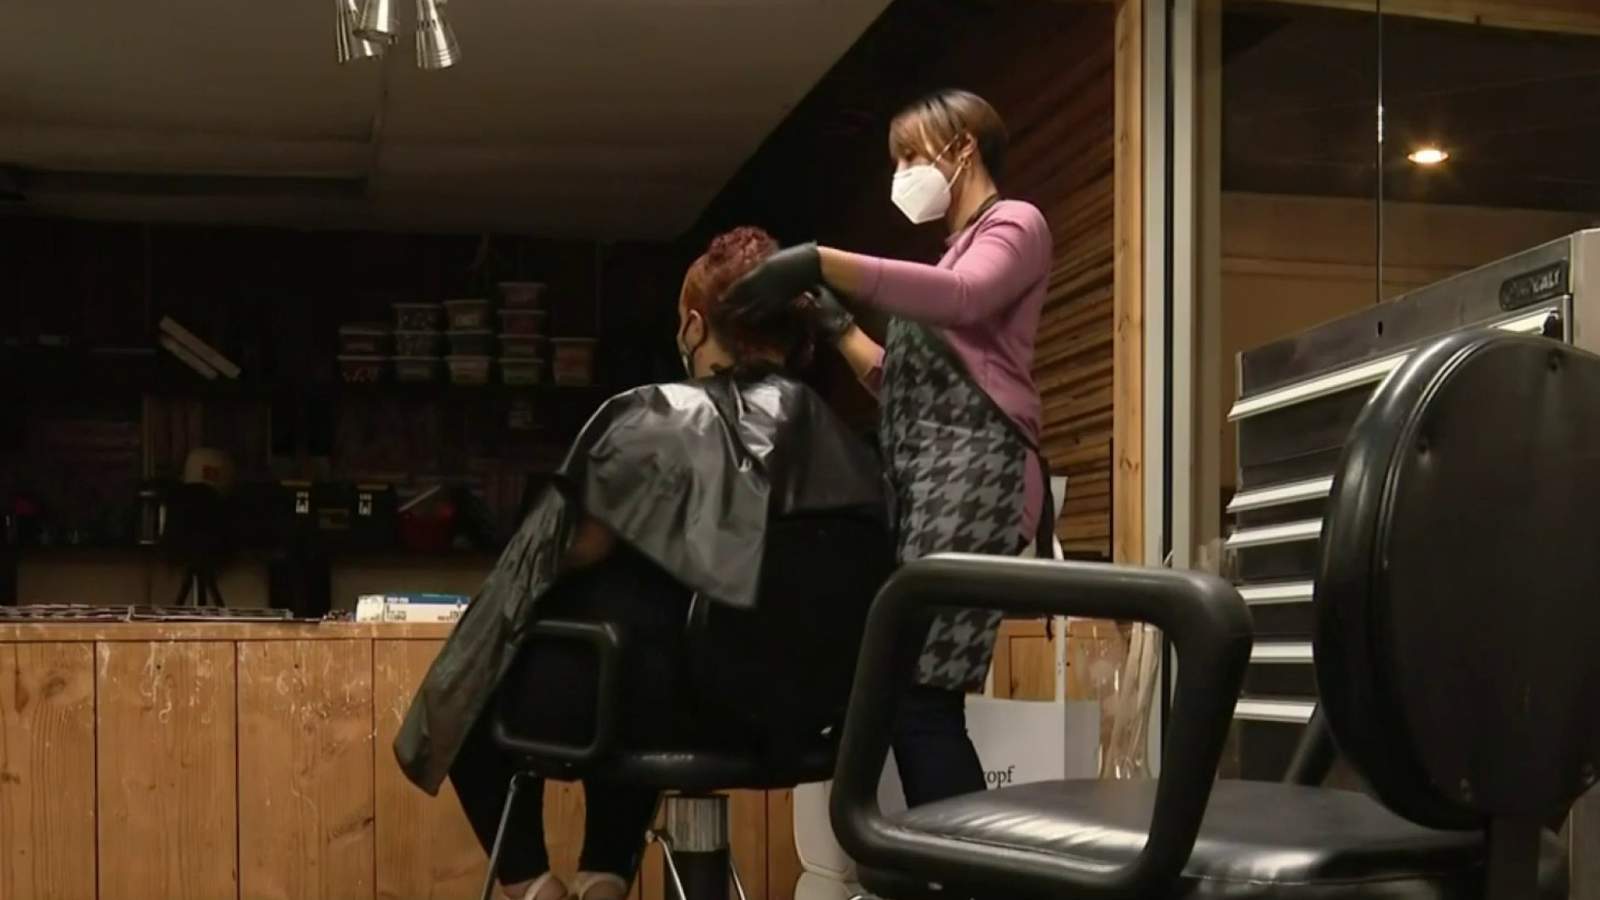 Detroit's Census push moves into city's barber shops, salons